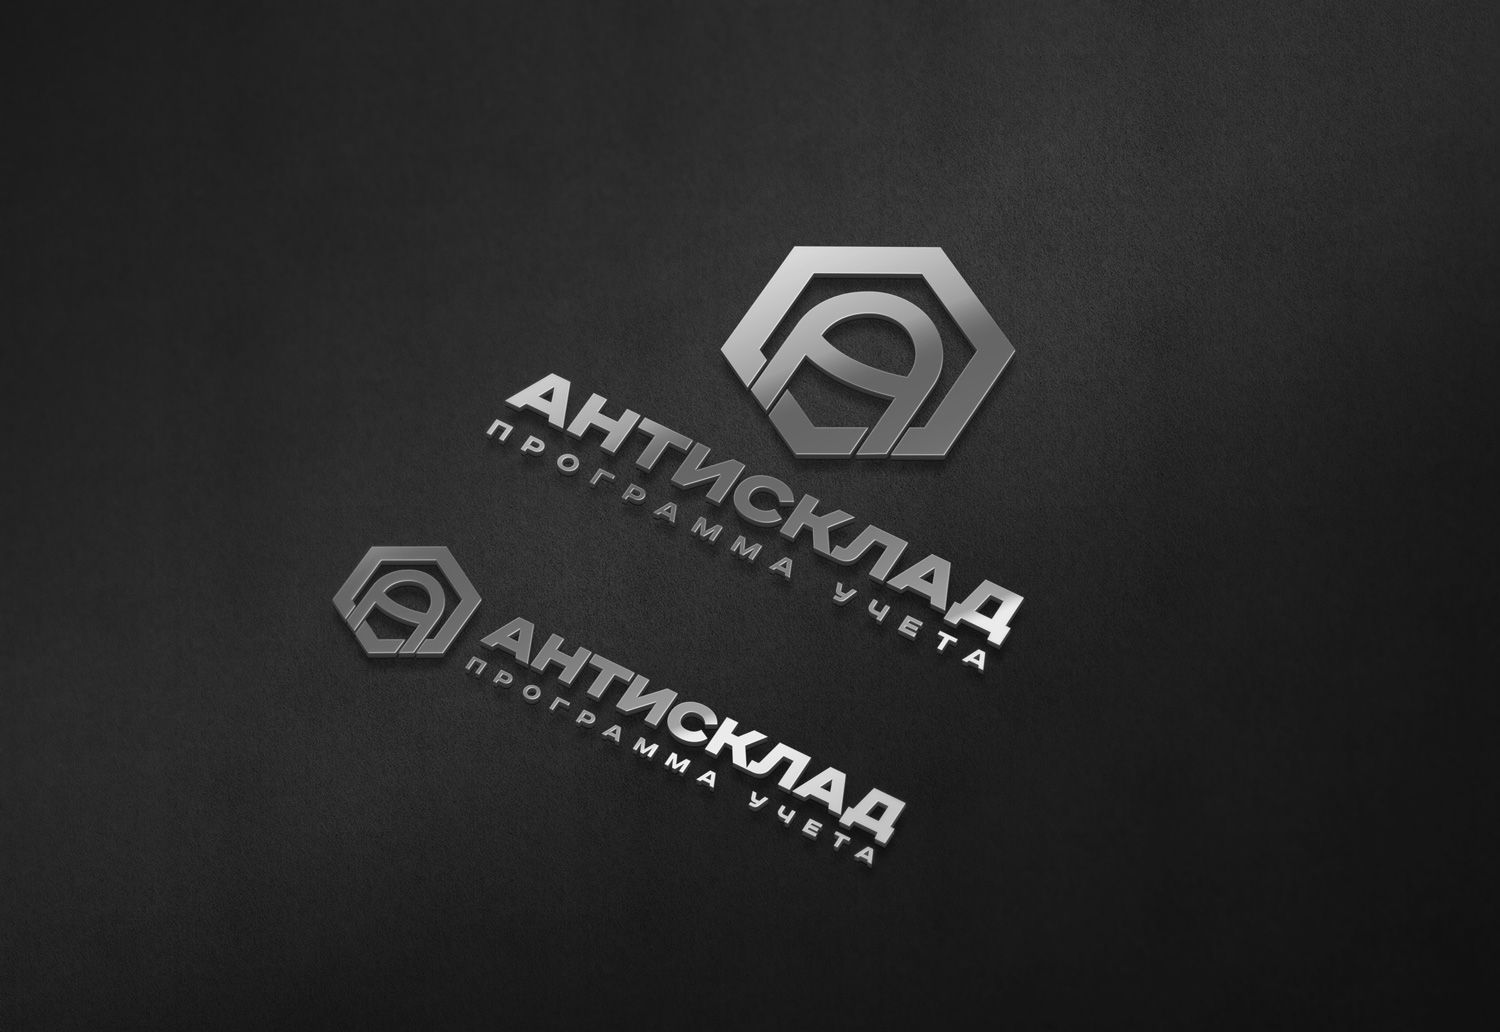 Логотип - программа для учета товаров - дизайнер spawnkr